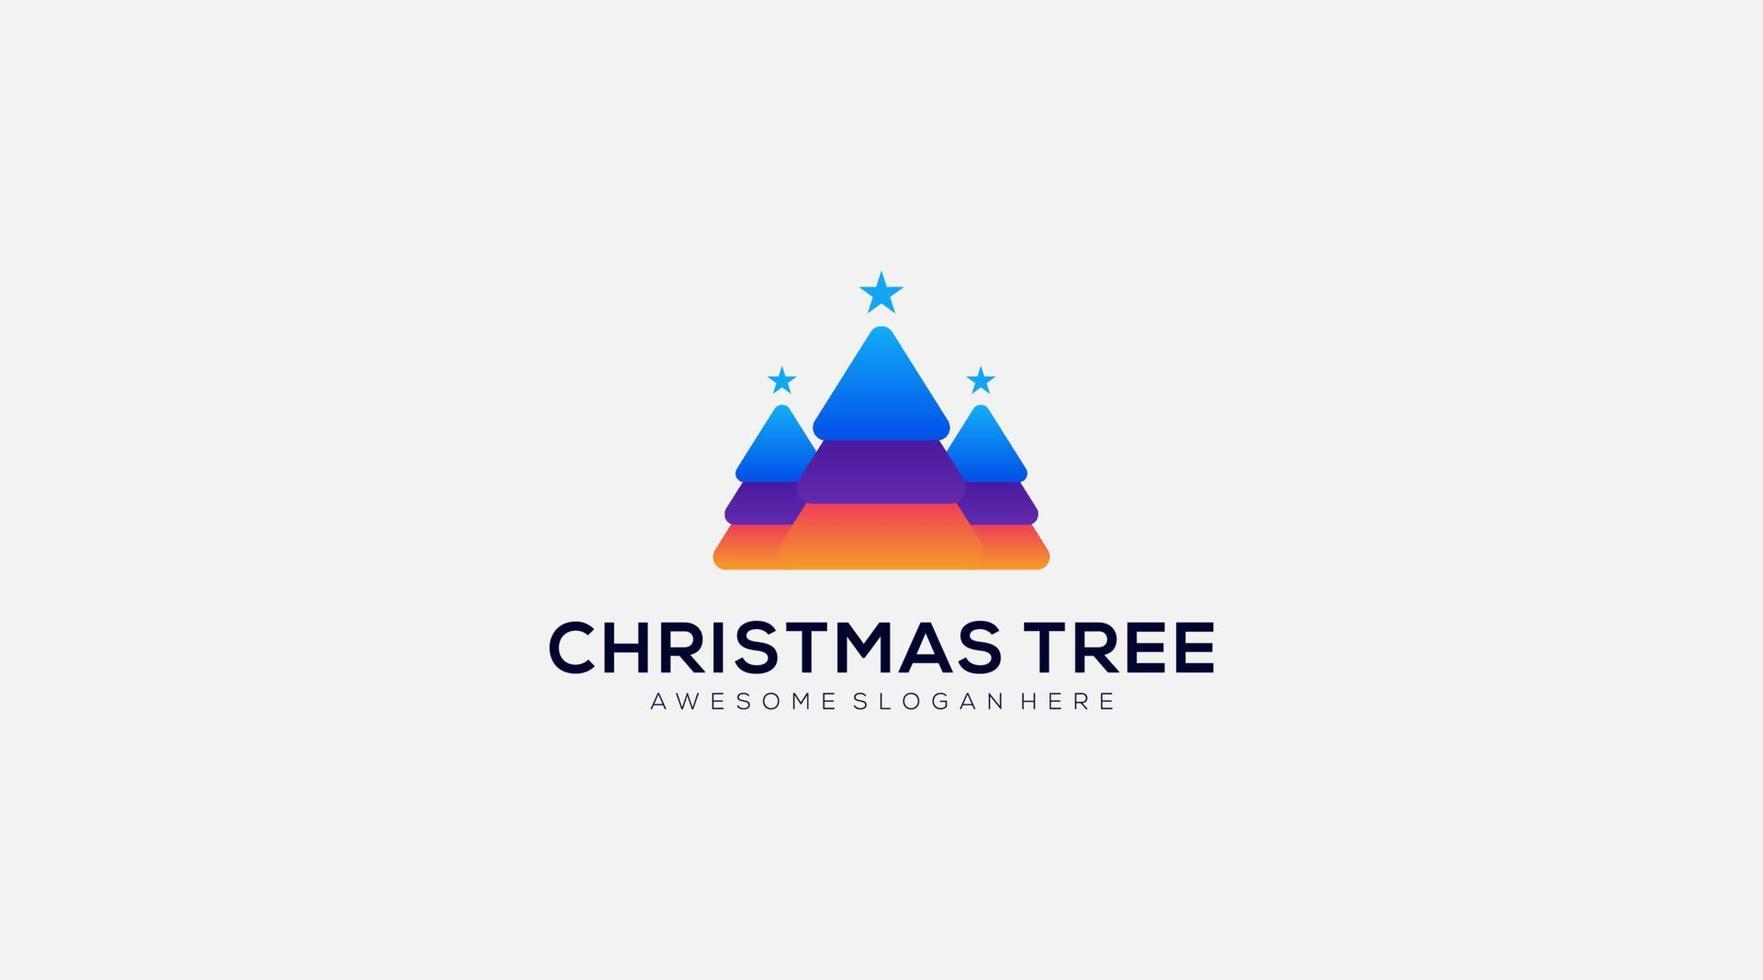 Colorful Christmas trees icon logo design vector template